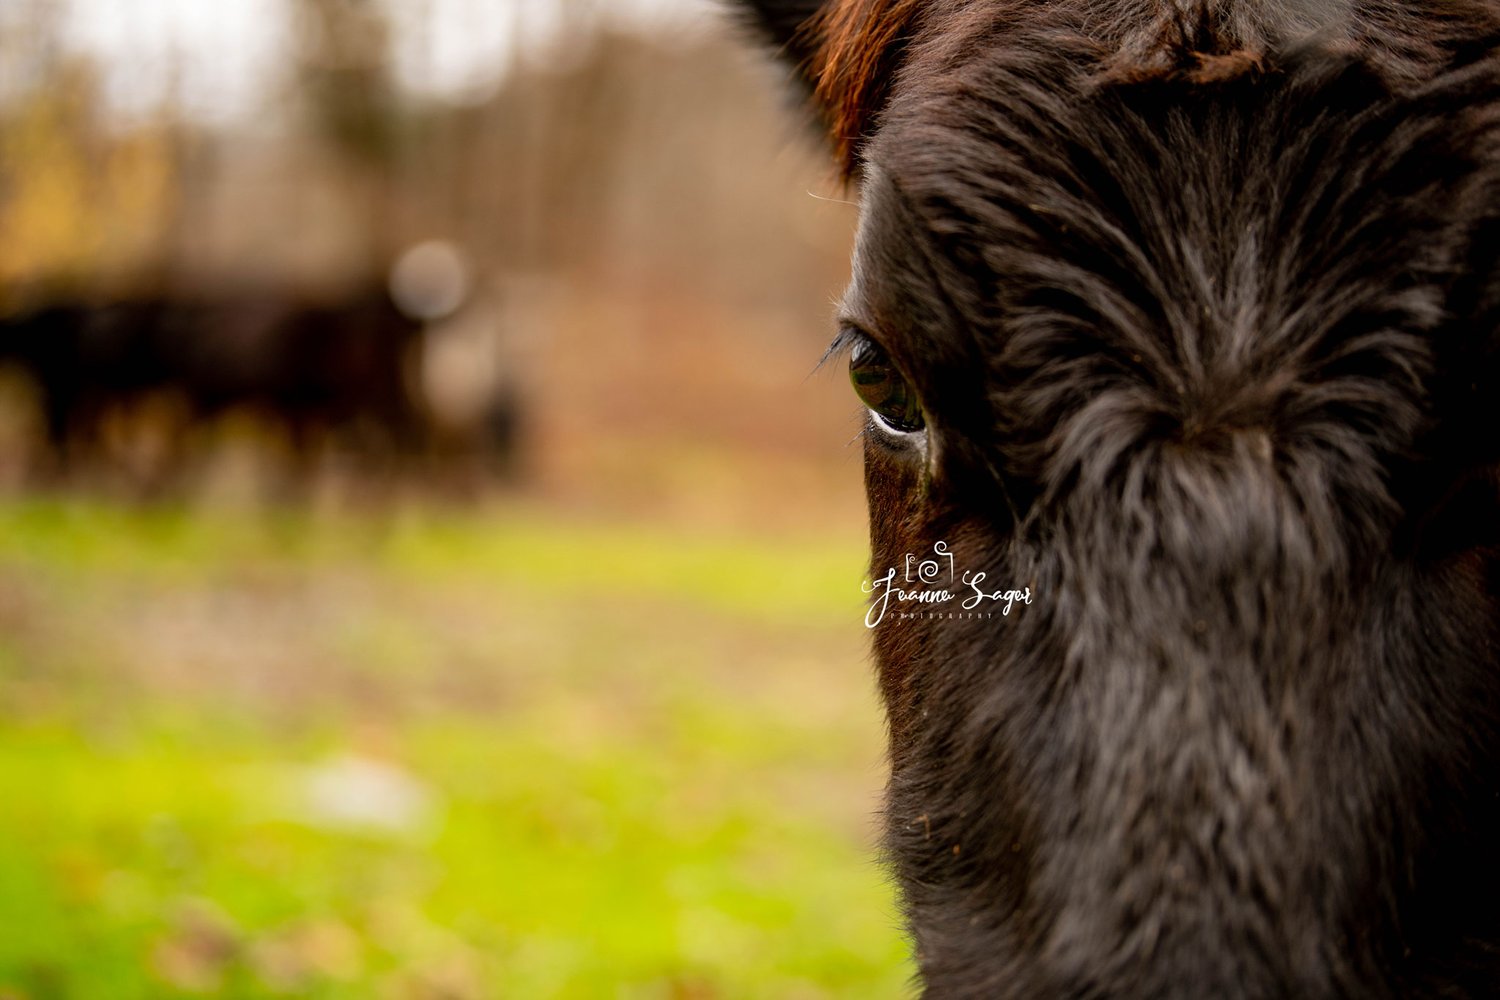 A close up of a black cow's eye is seen in a branding photo for a farm